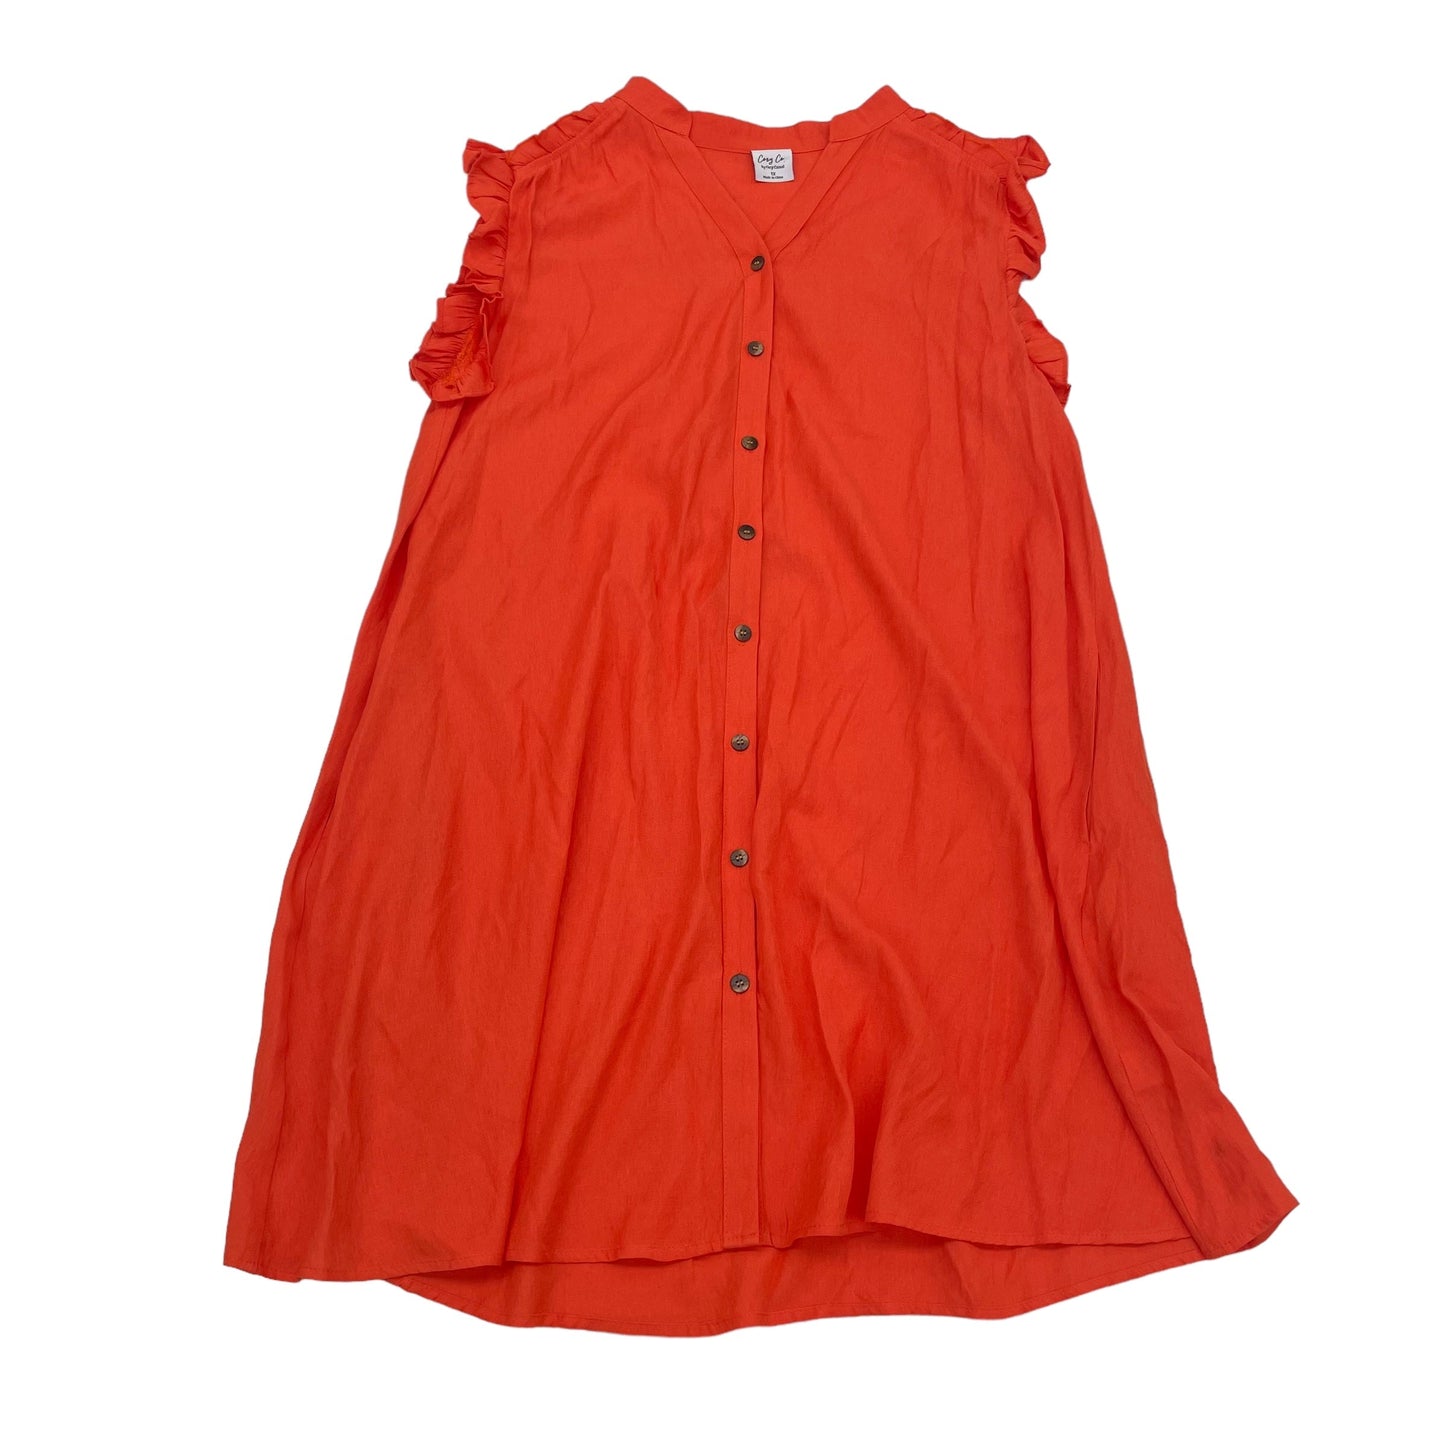 ORANGE    CLOTHES MENTOR DRESS CASUAL SHORT, Size 1X